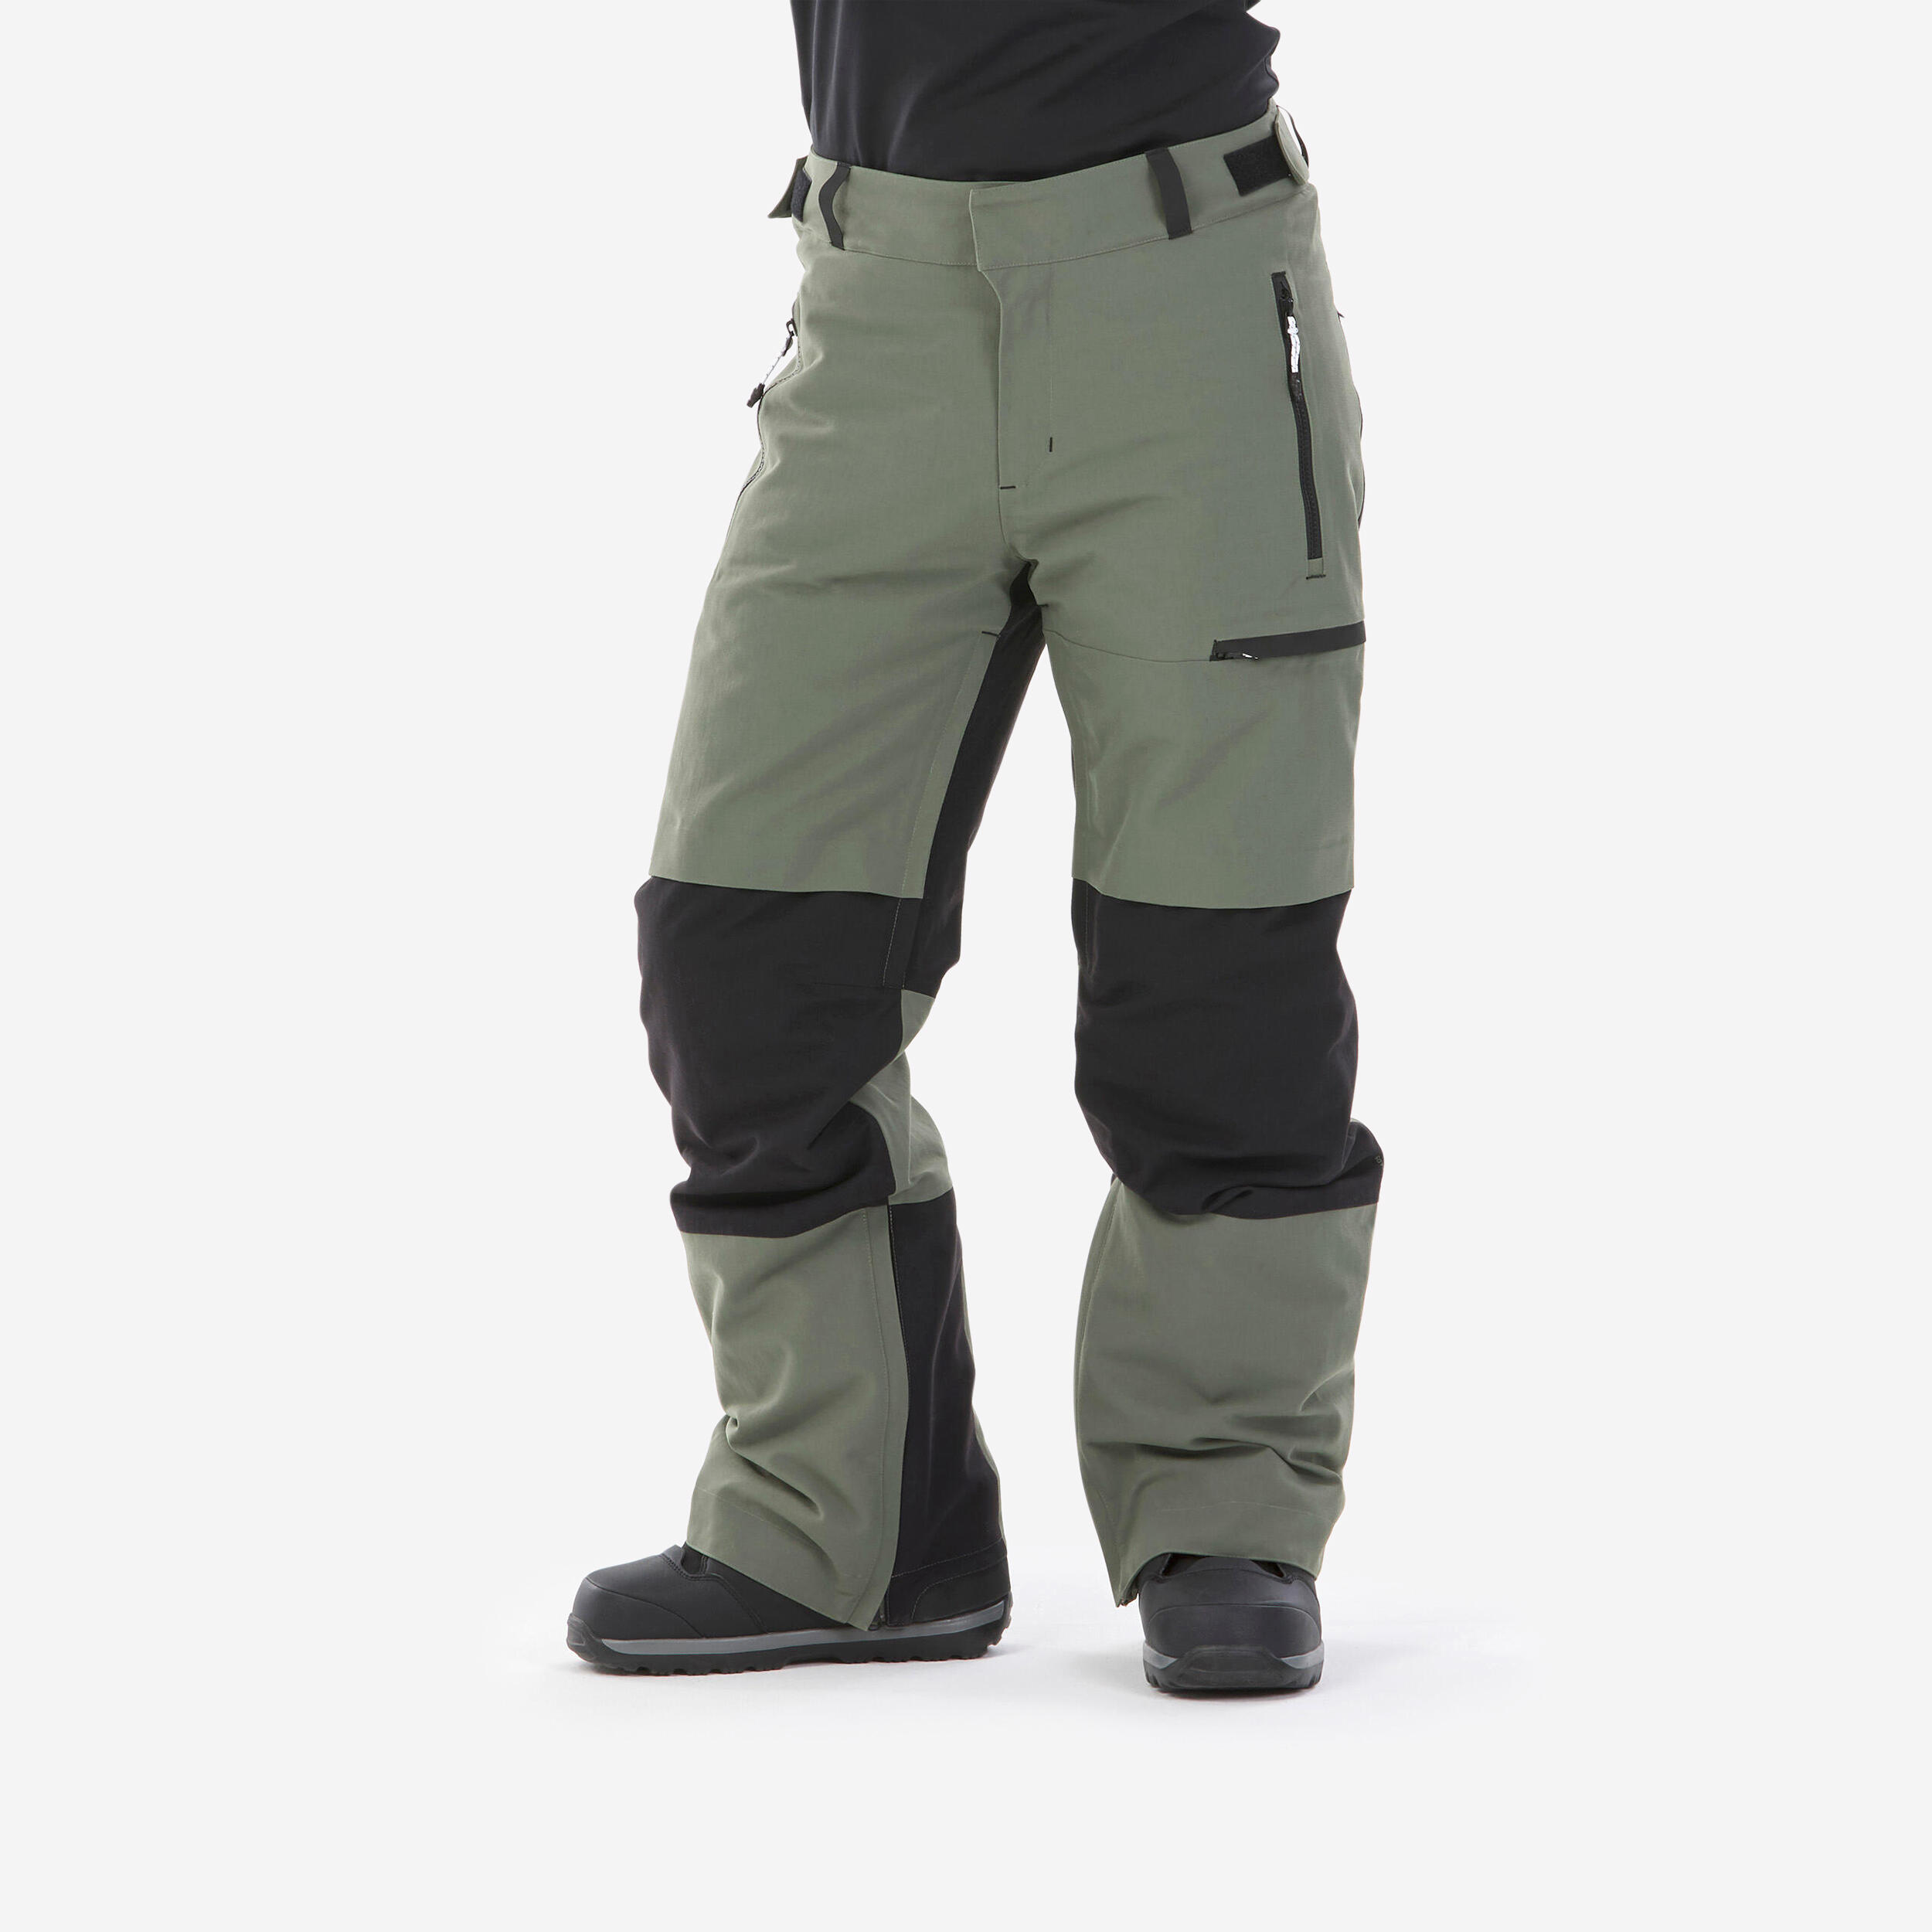 DREAMSCAPE Men's waterproof snowboard trousers - SNB 500 - Khaki